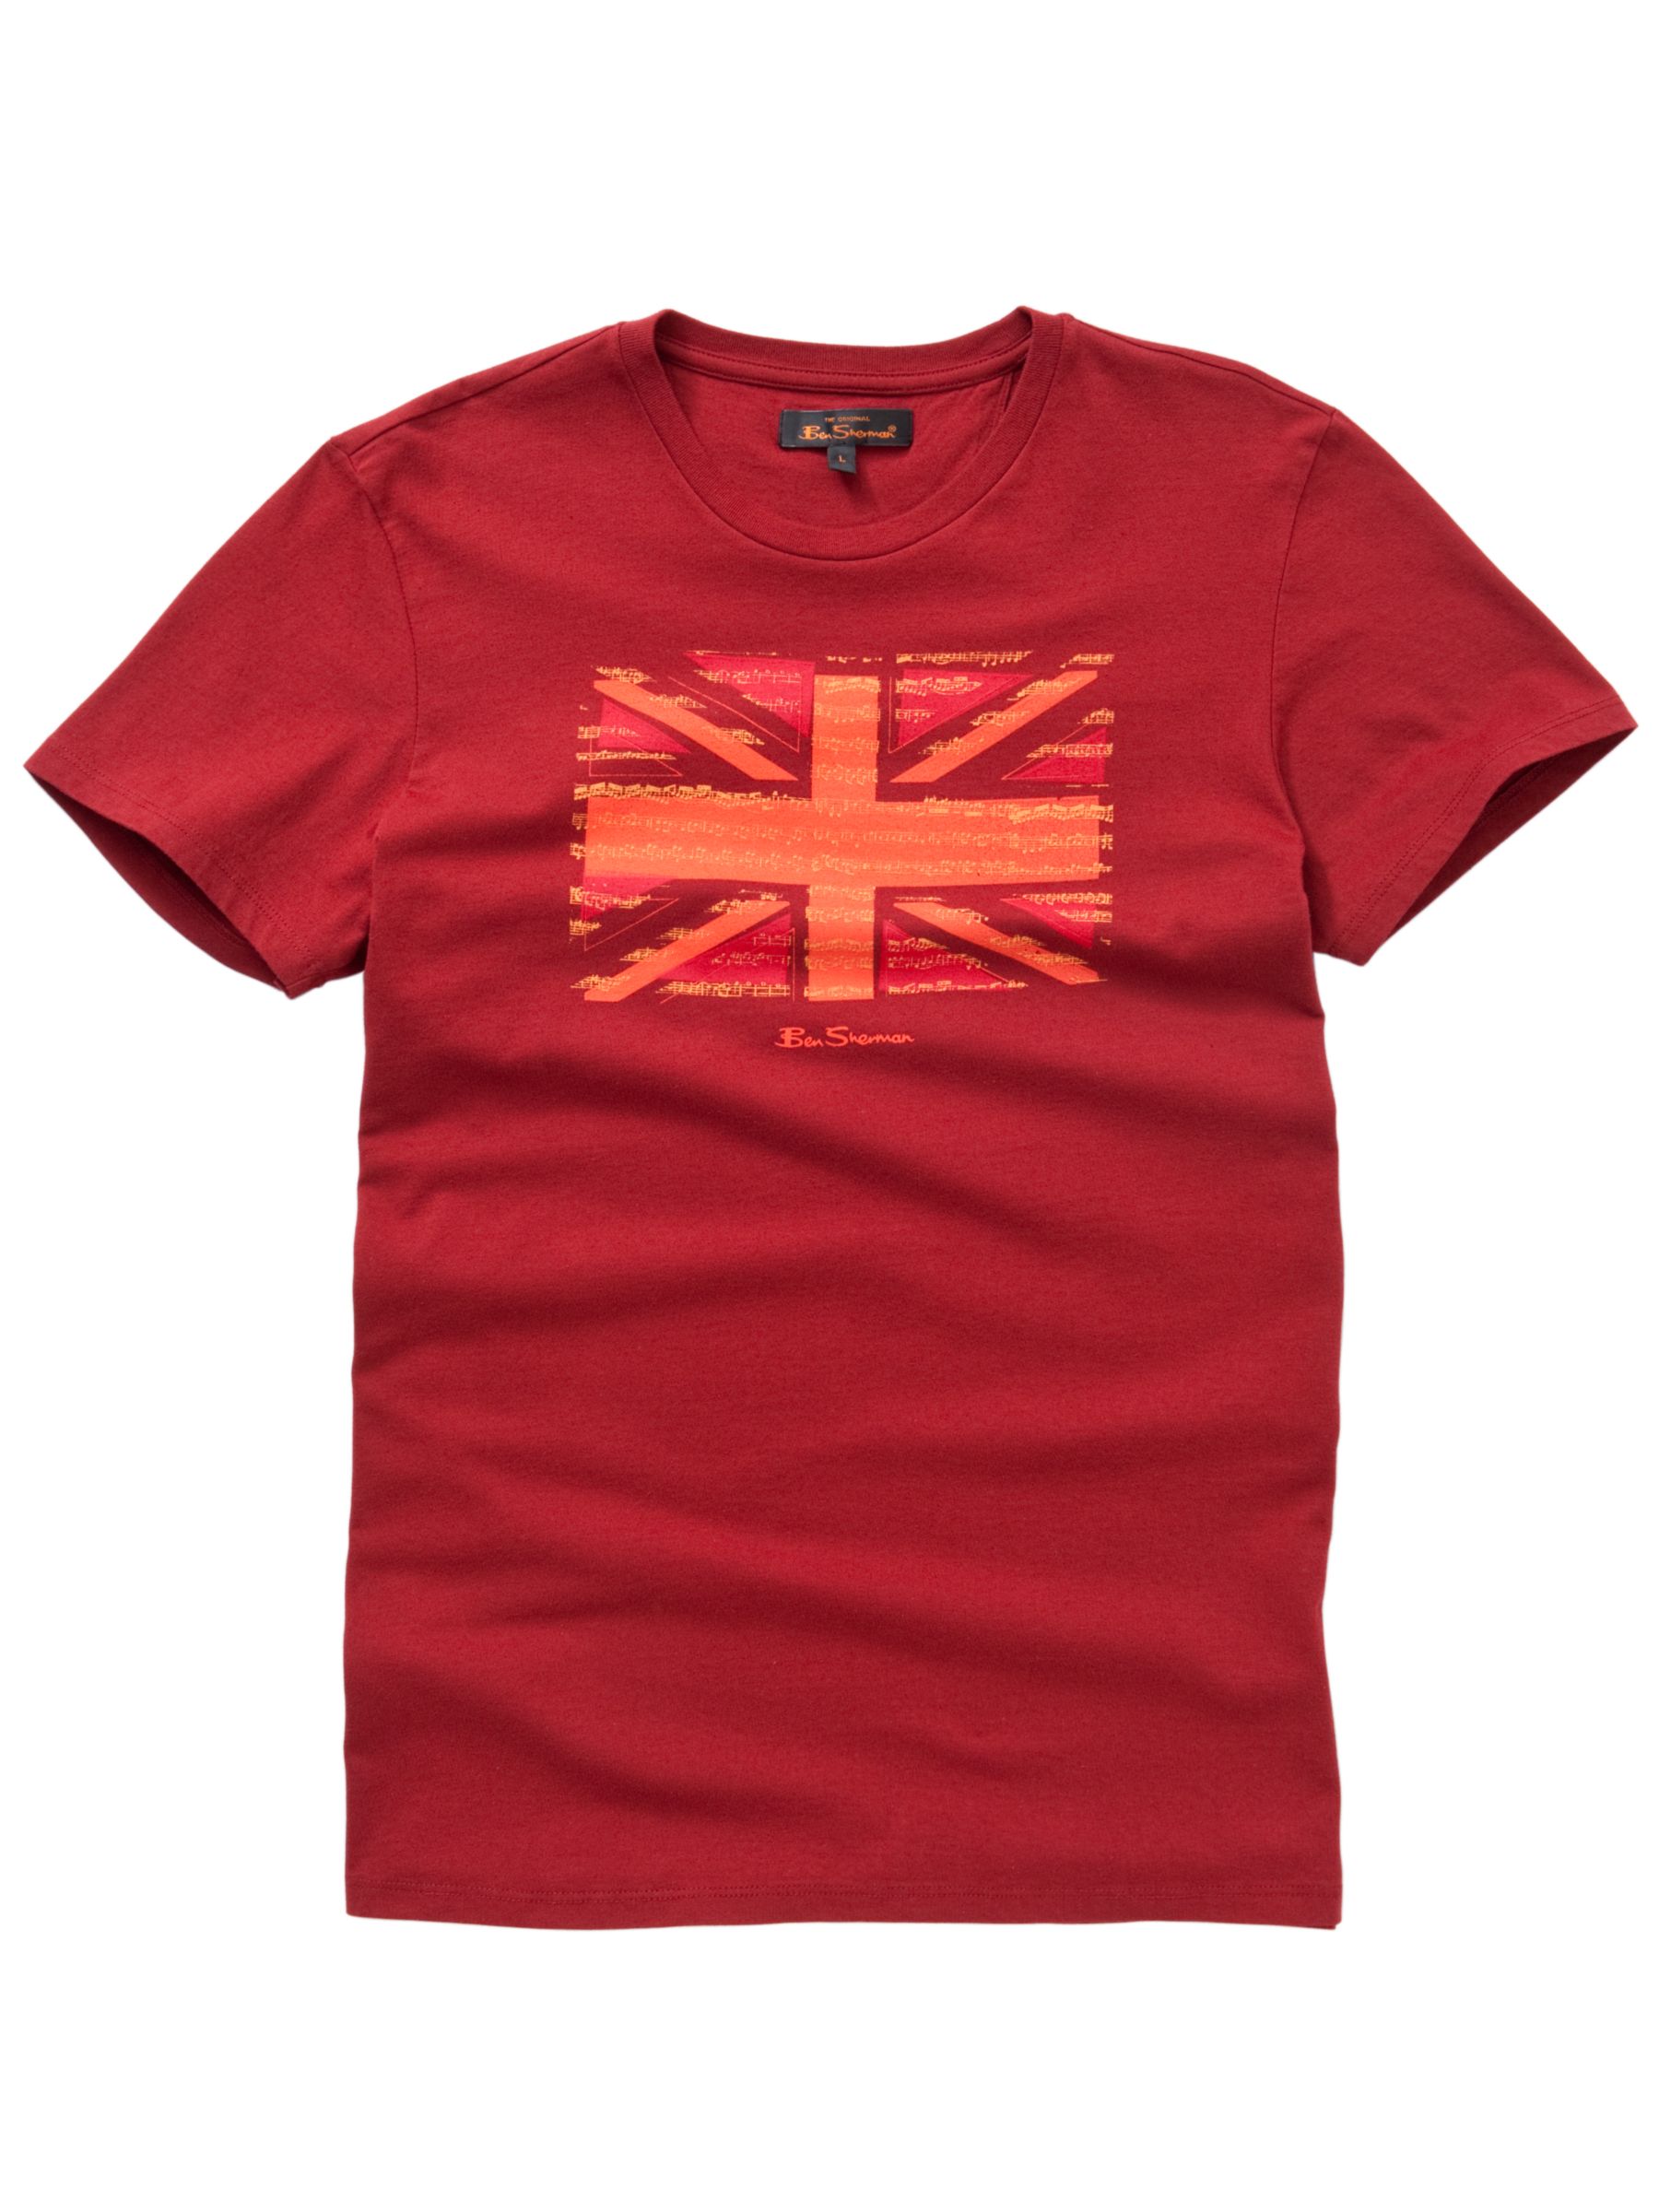 Ben Sherman Union Jack T-Shirt, Red